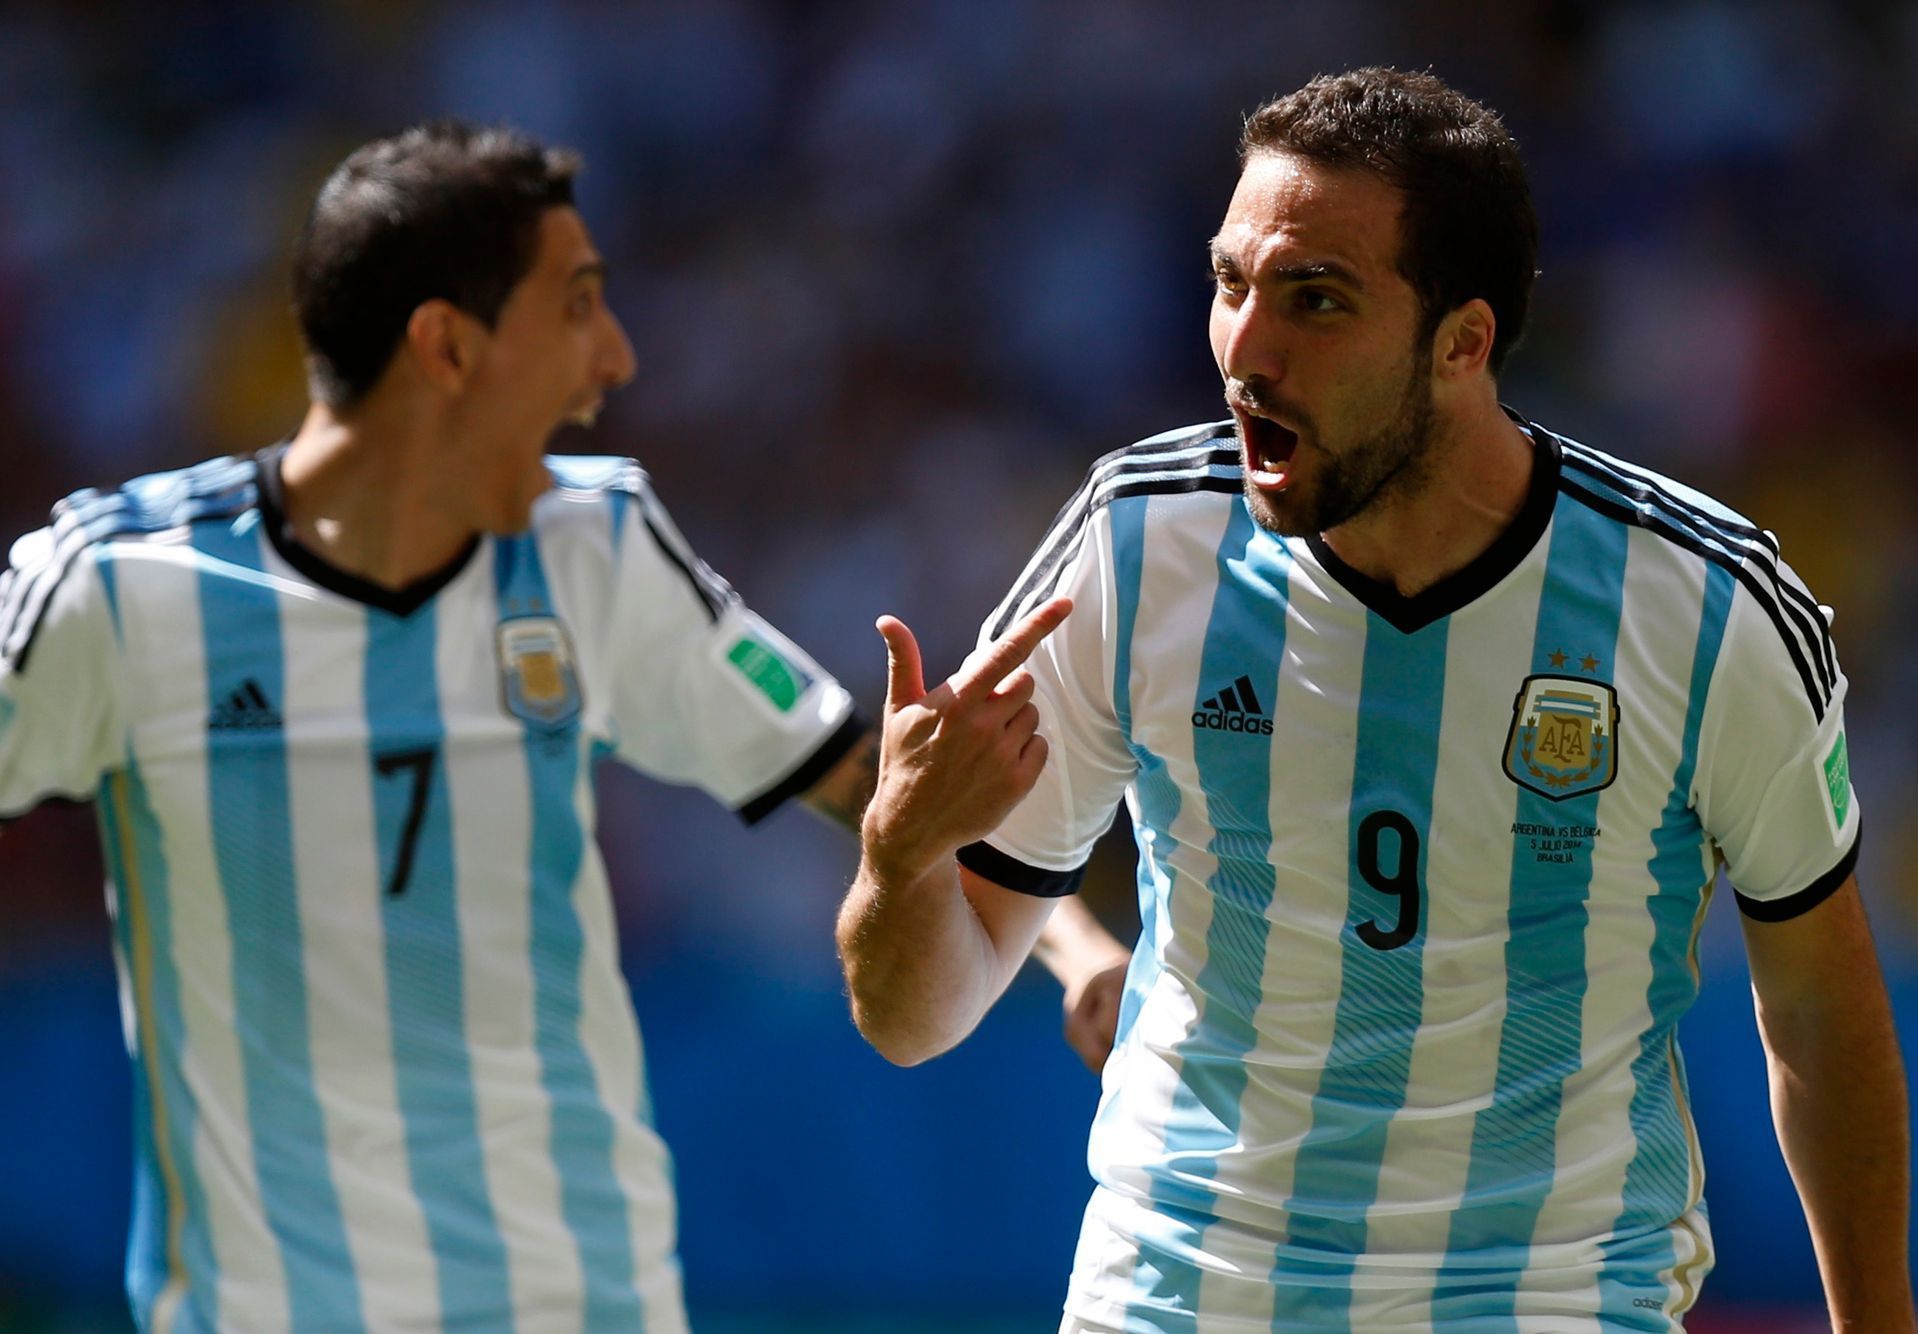 MS 2014, Argentina-Belgie: Angel Di Maria a Gonzalo Higuain (9) slaví gól